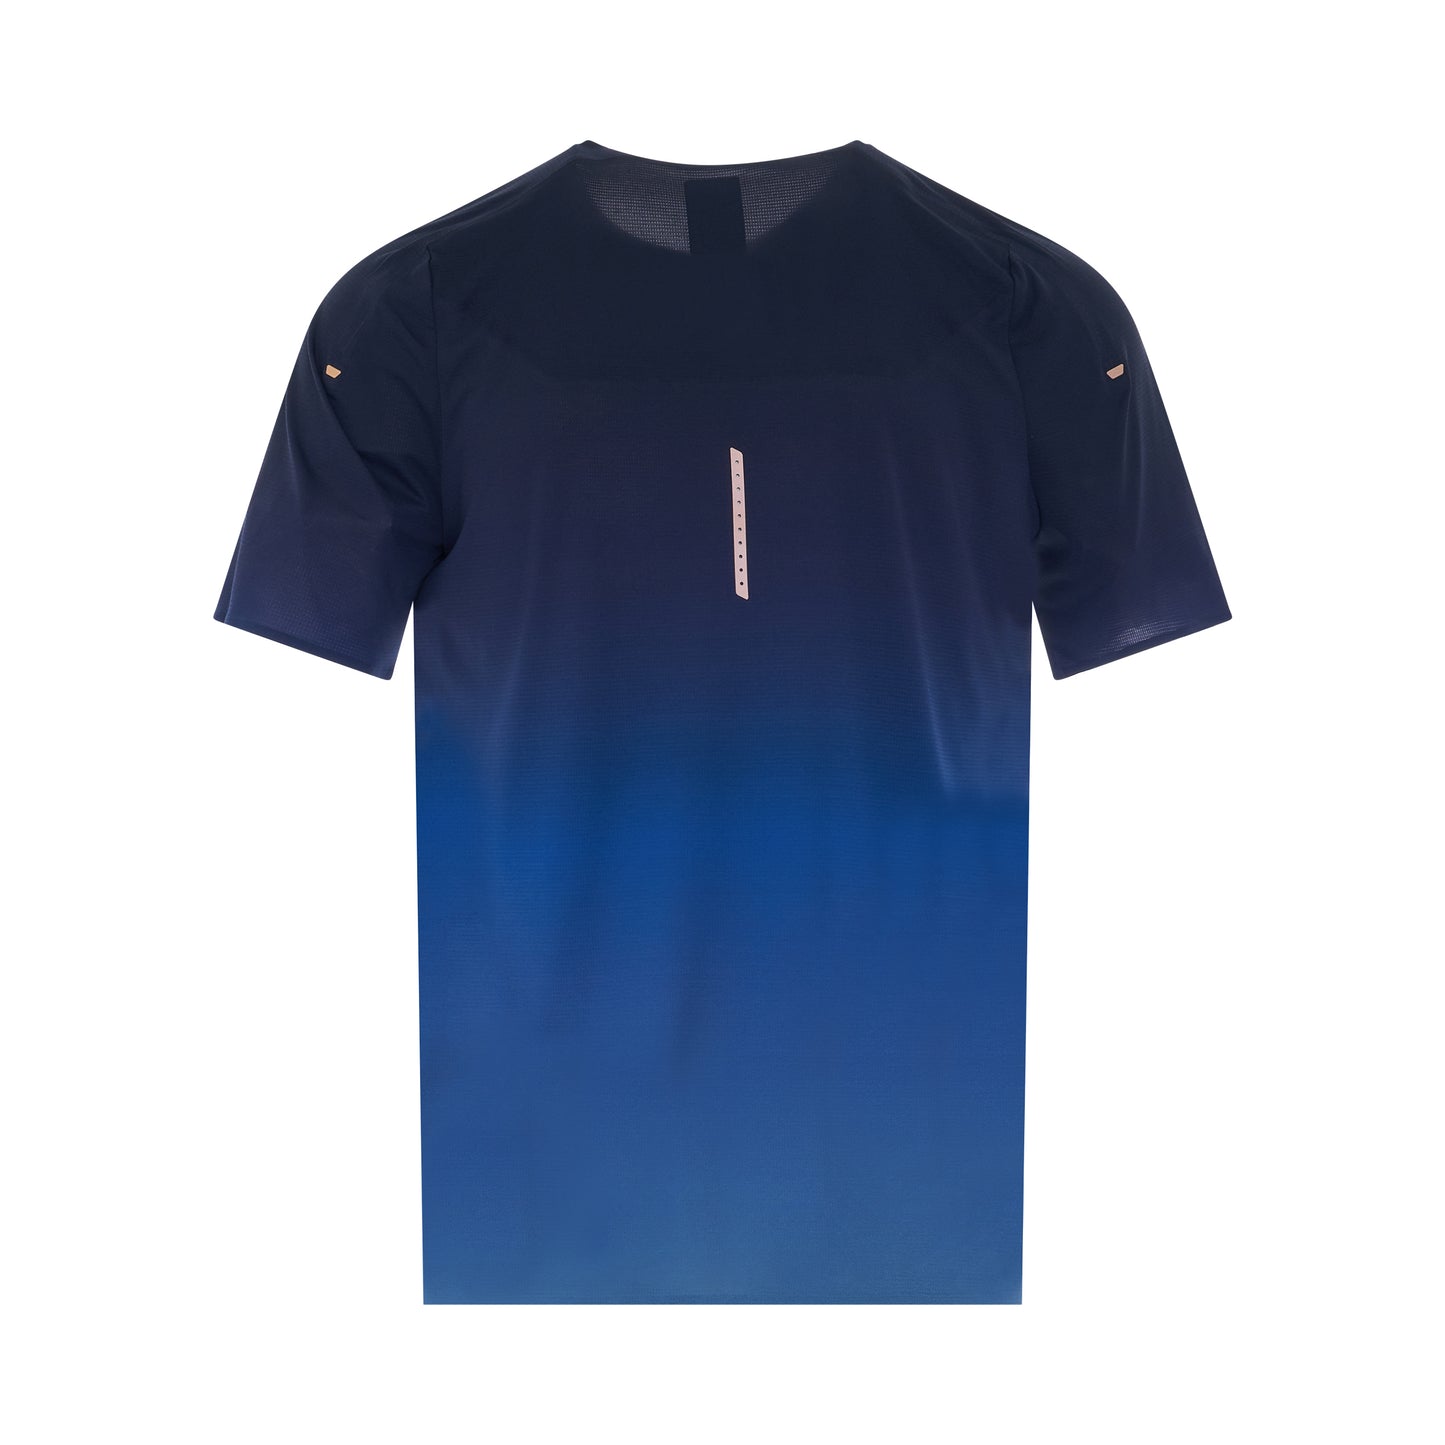 Loewe x ON Performance T-Shirt in Gradient Blue